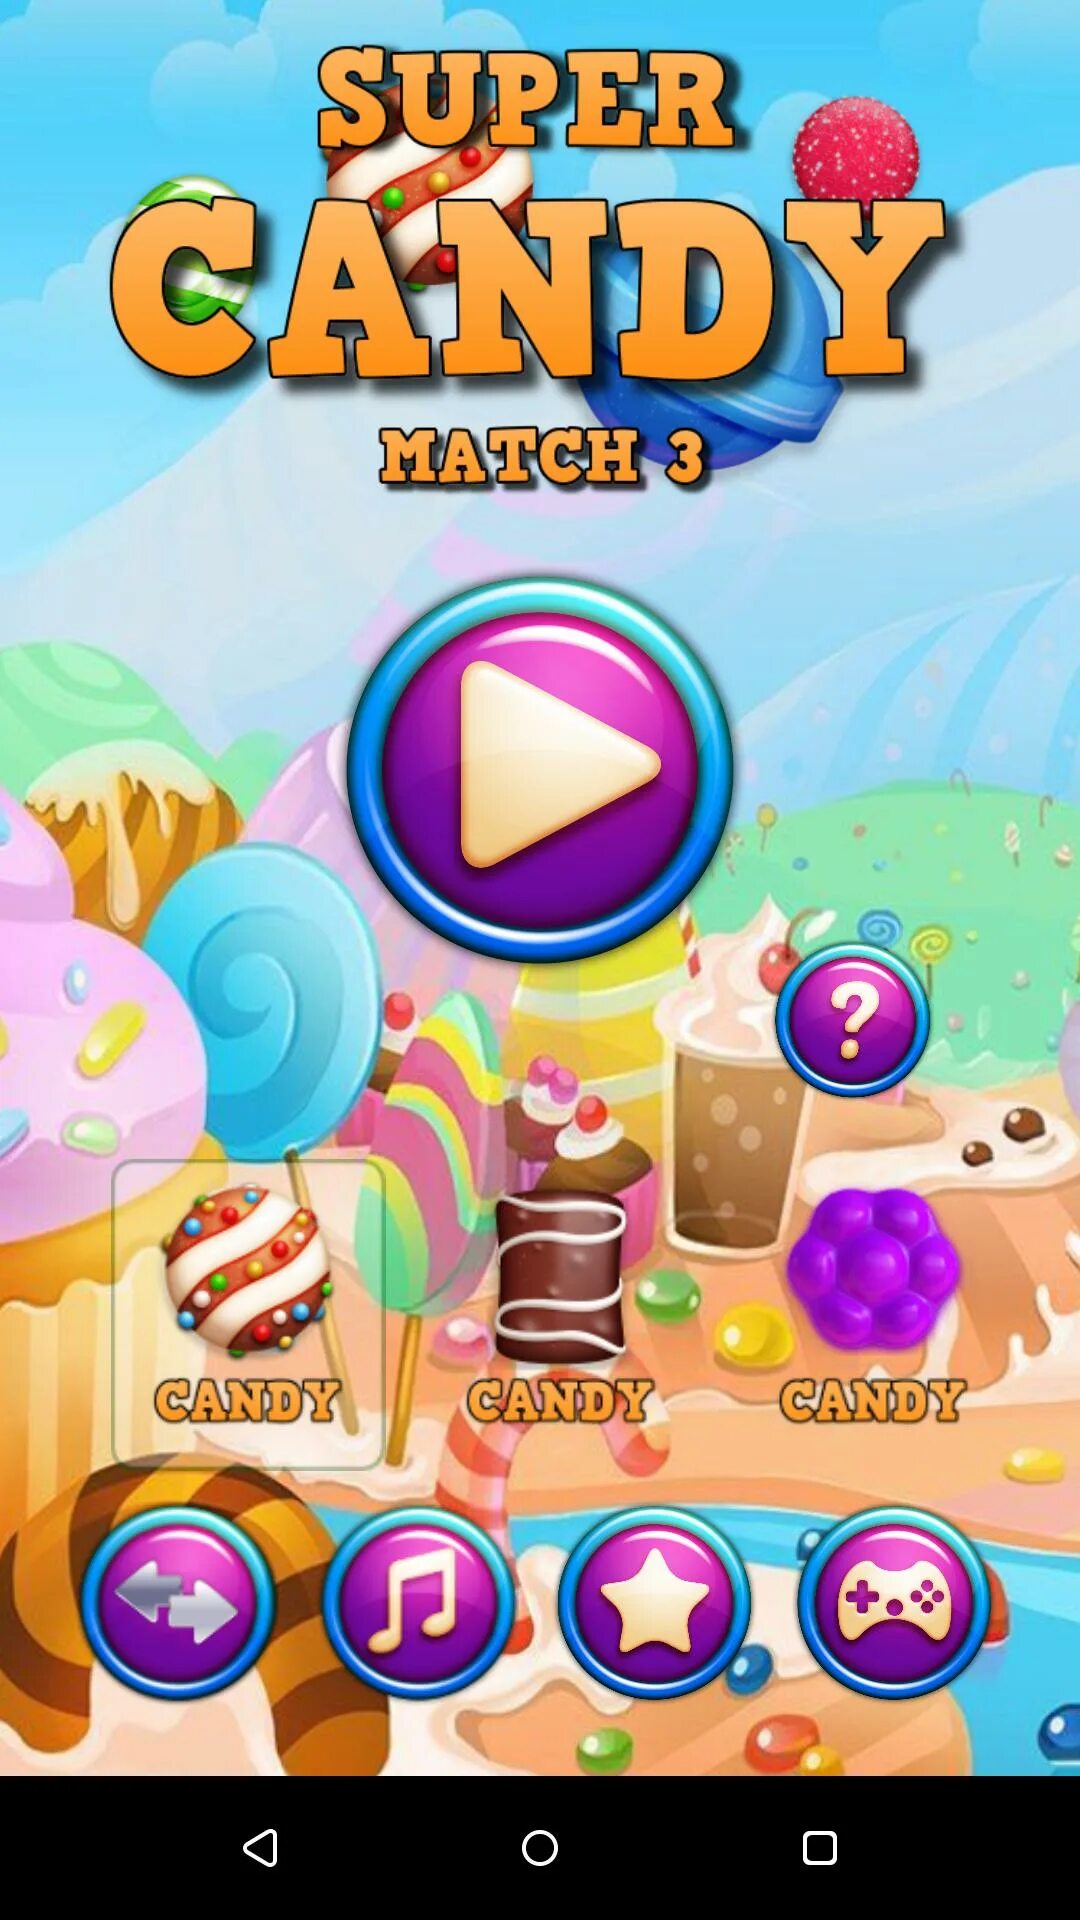 Candy match